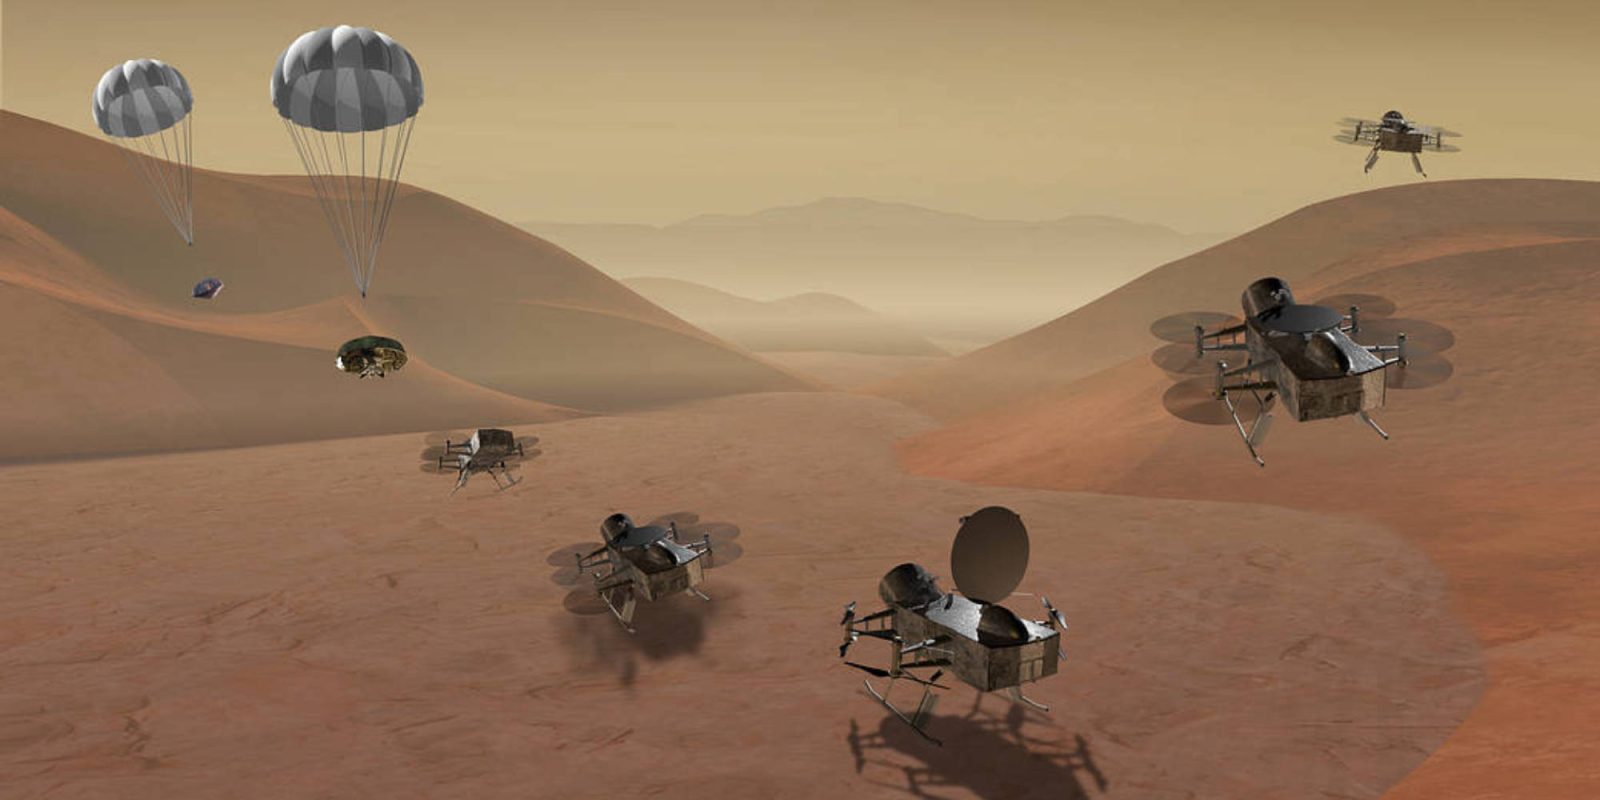 NASA Dragonfly drone Saturn’s Titan drone-related flight programs